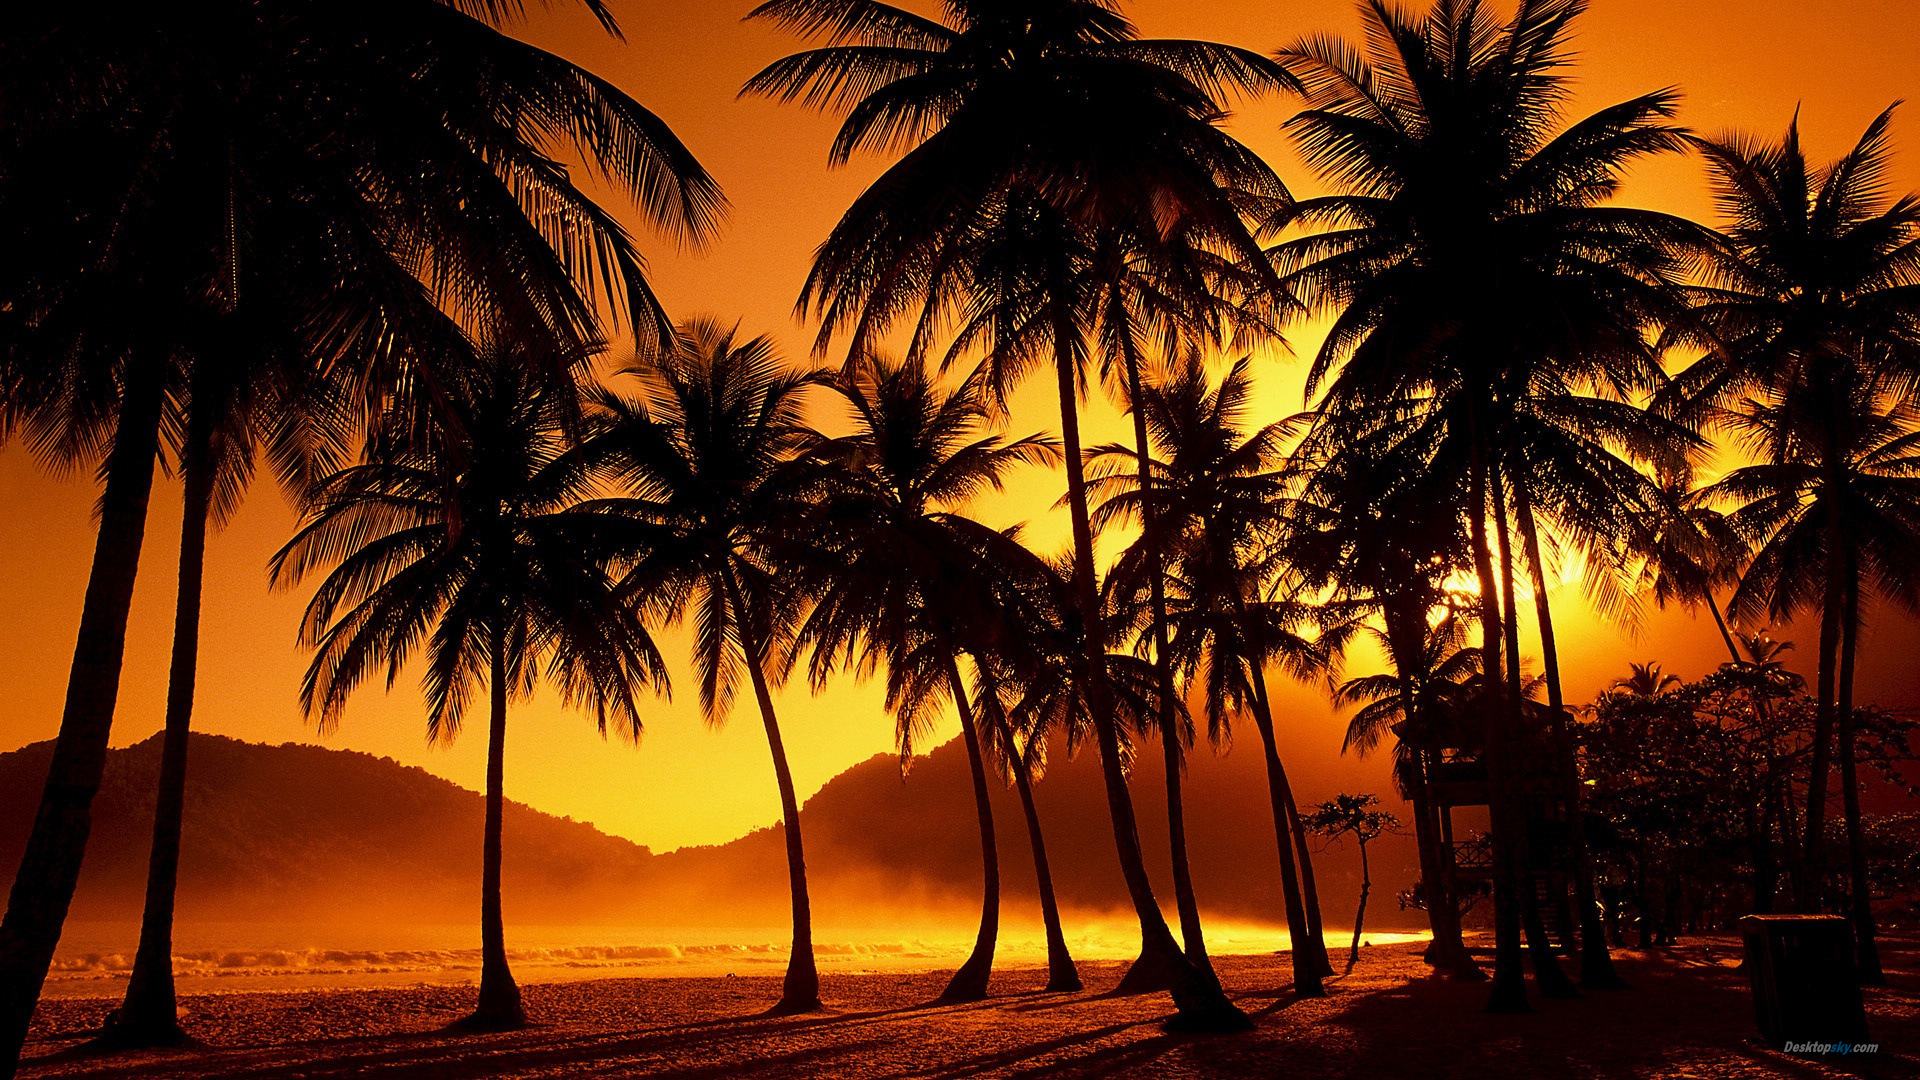 Wallpapers Backgrounds   Palm tree sunset beautiful Desktop Wallpaper